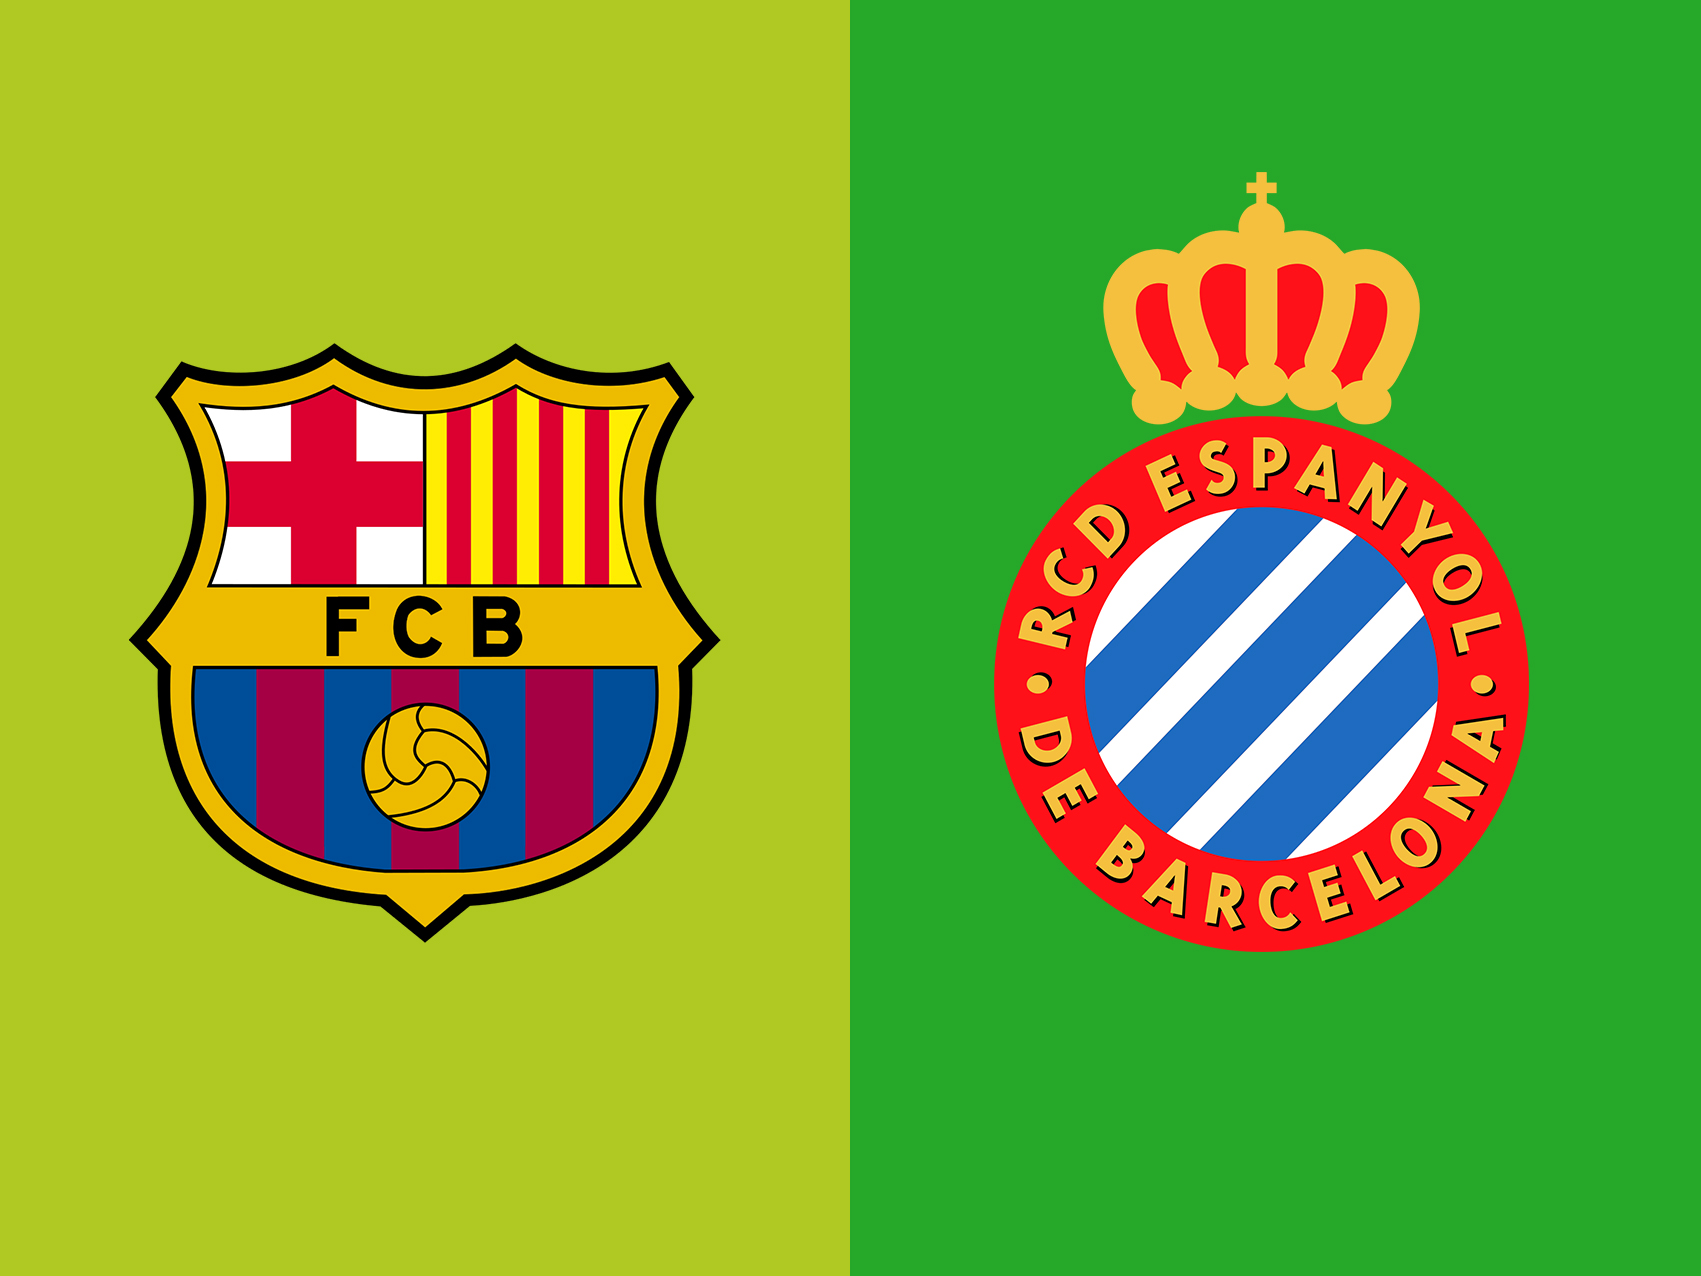 soi-keo-ca-cuoc-bong-da-ngay-30-3-barcelona-vs-espanyol-derby-mot-chieu-b9-1.jpg